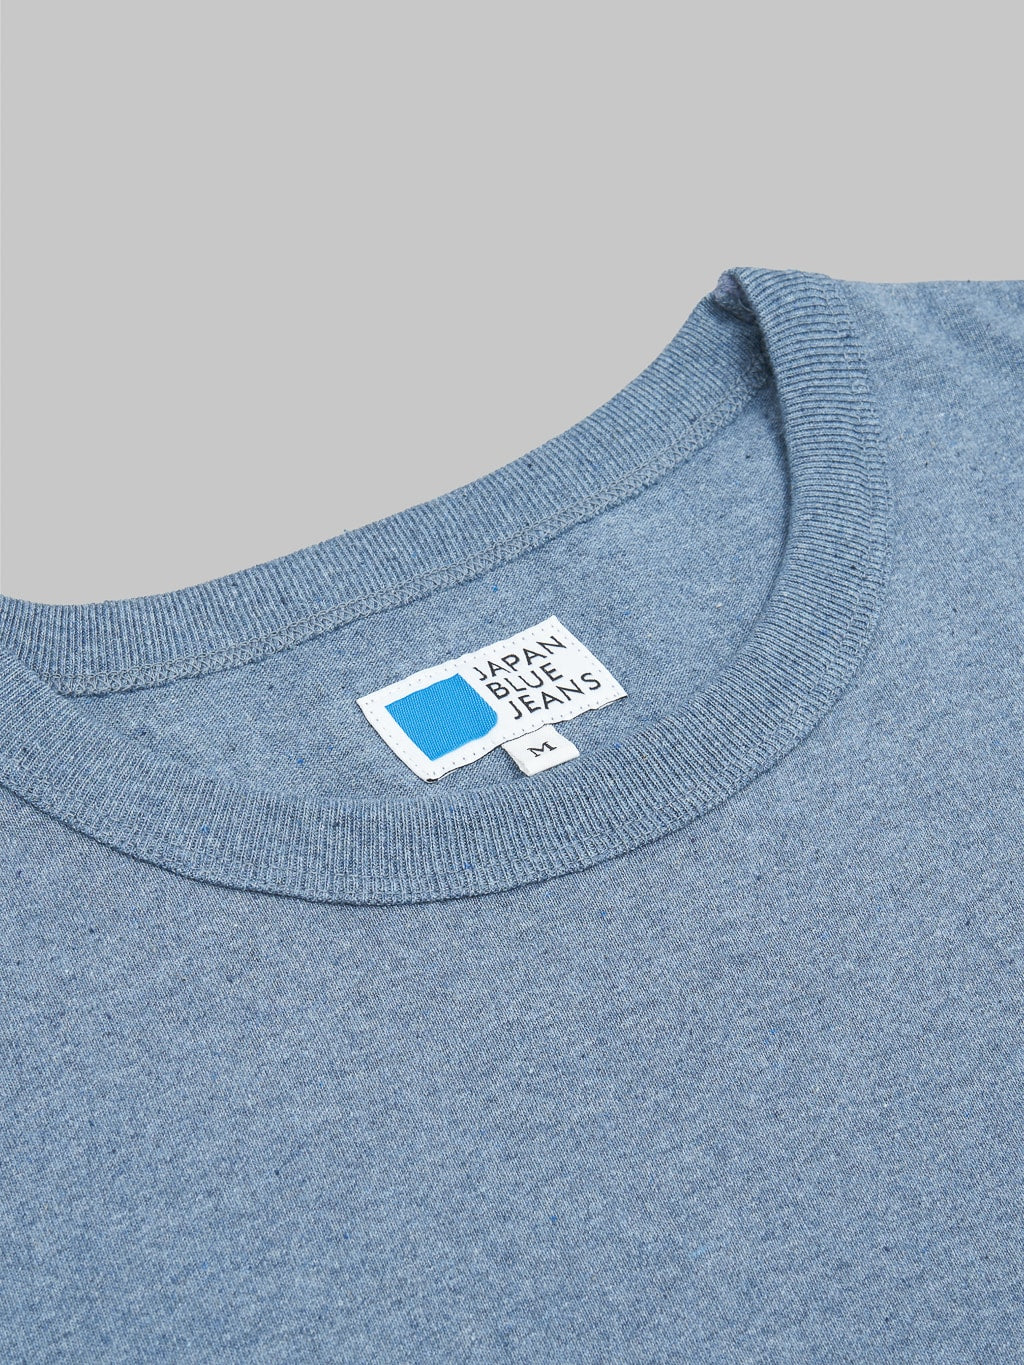 Japan Blue Recycled Denim Tshirt mid Indigo fabric